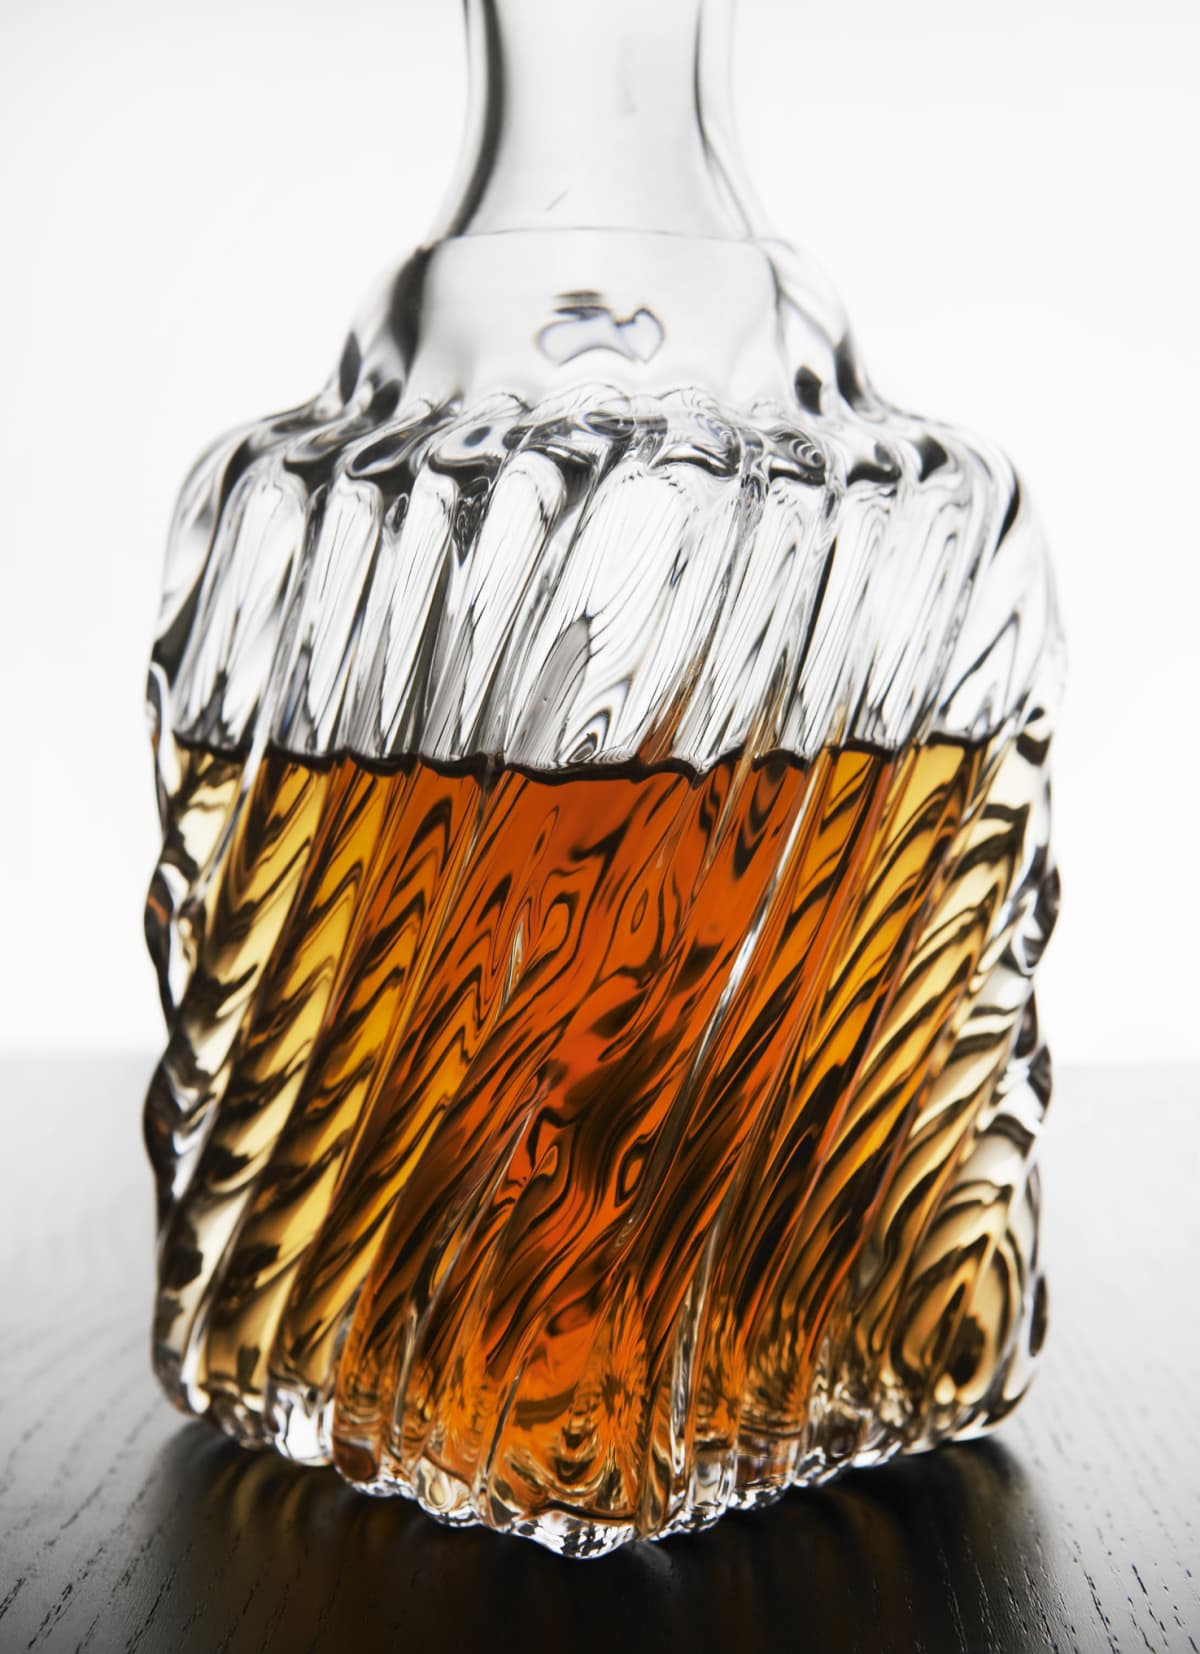 Bourbon in a decorative glass decanter